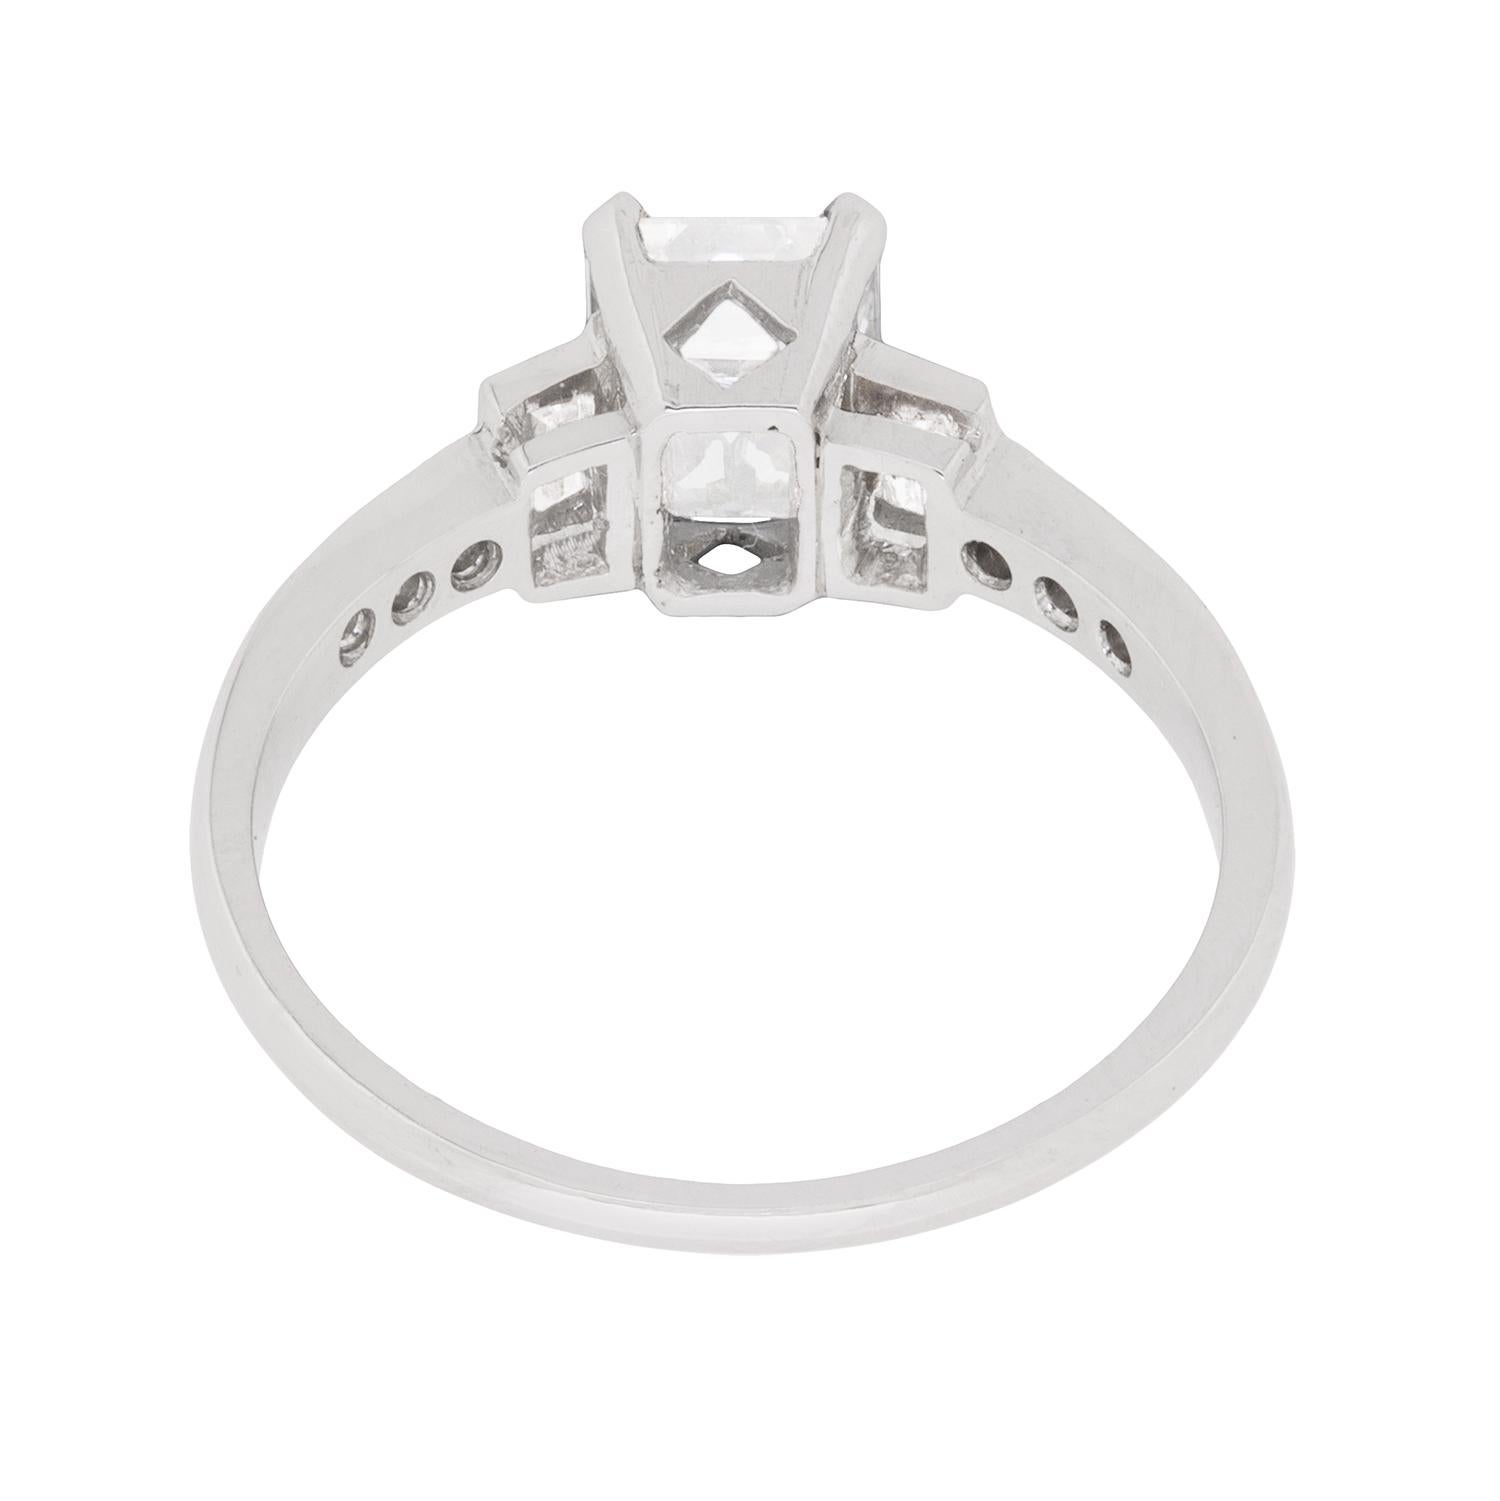 Women's or Men's Art Deco Emerald Cut Diamond Solitaire Engagement Ring, circa 1940s